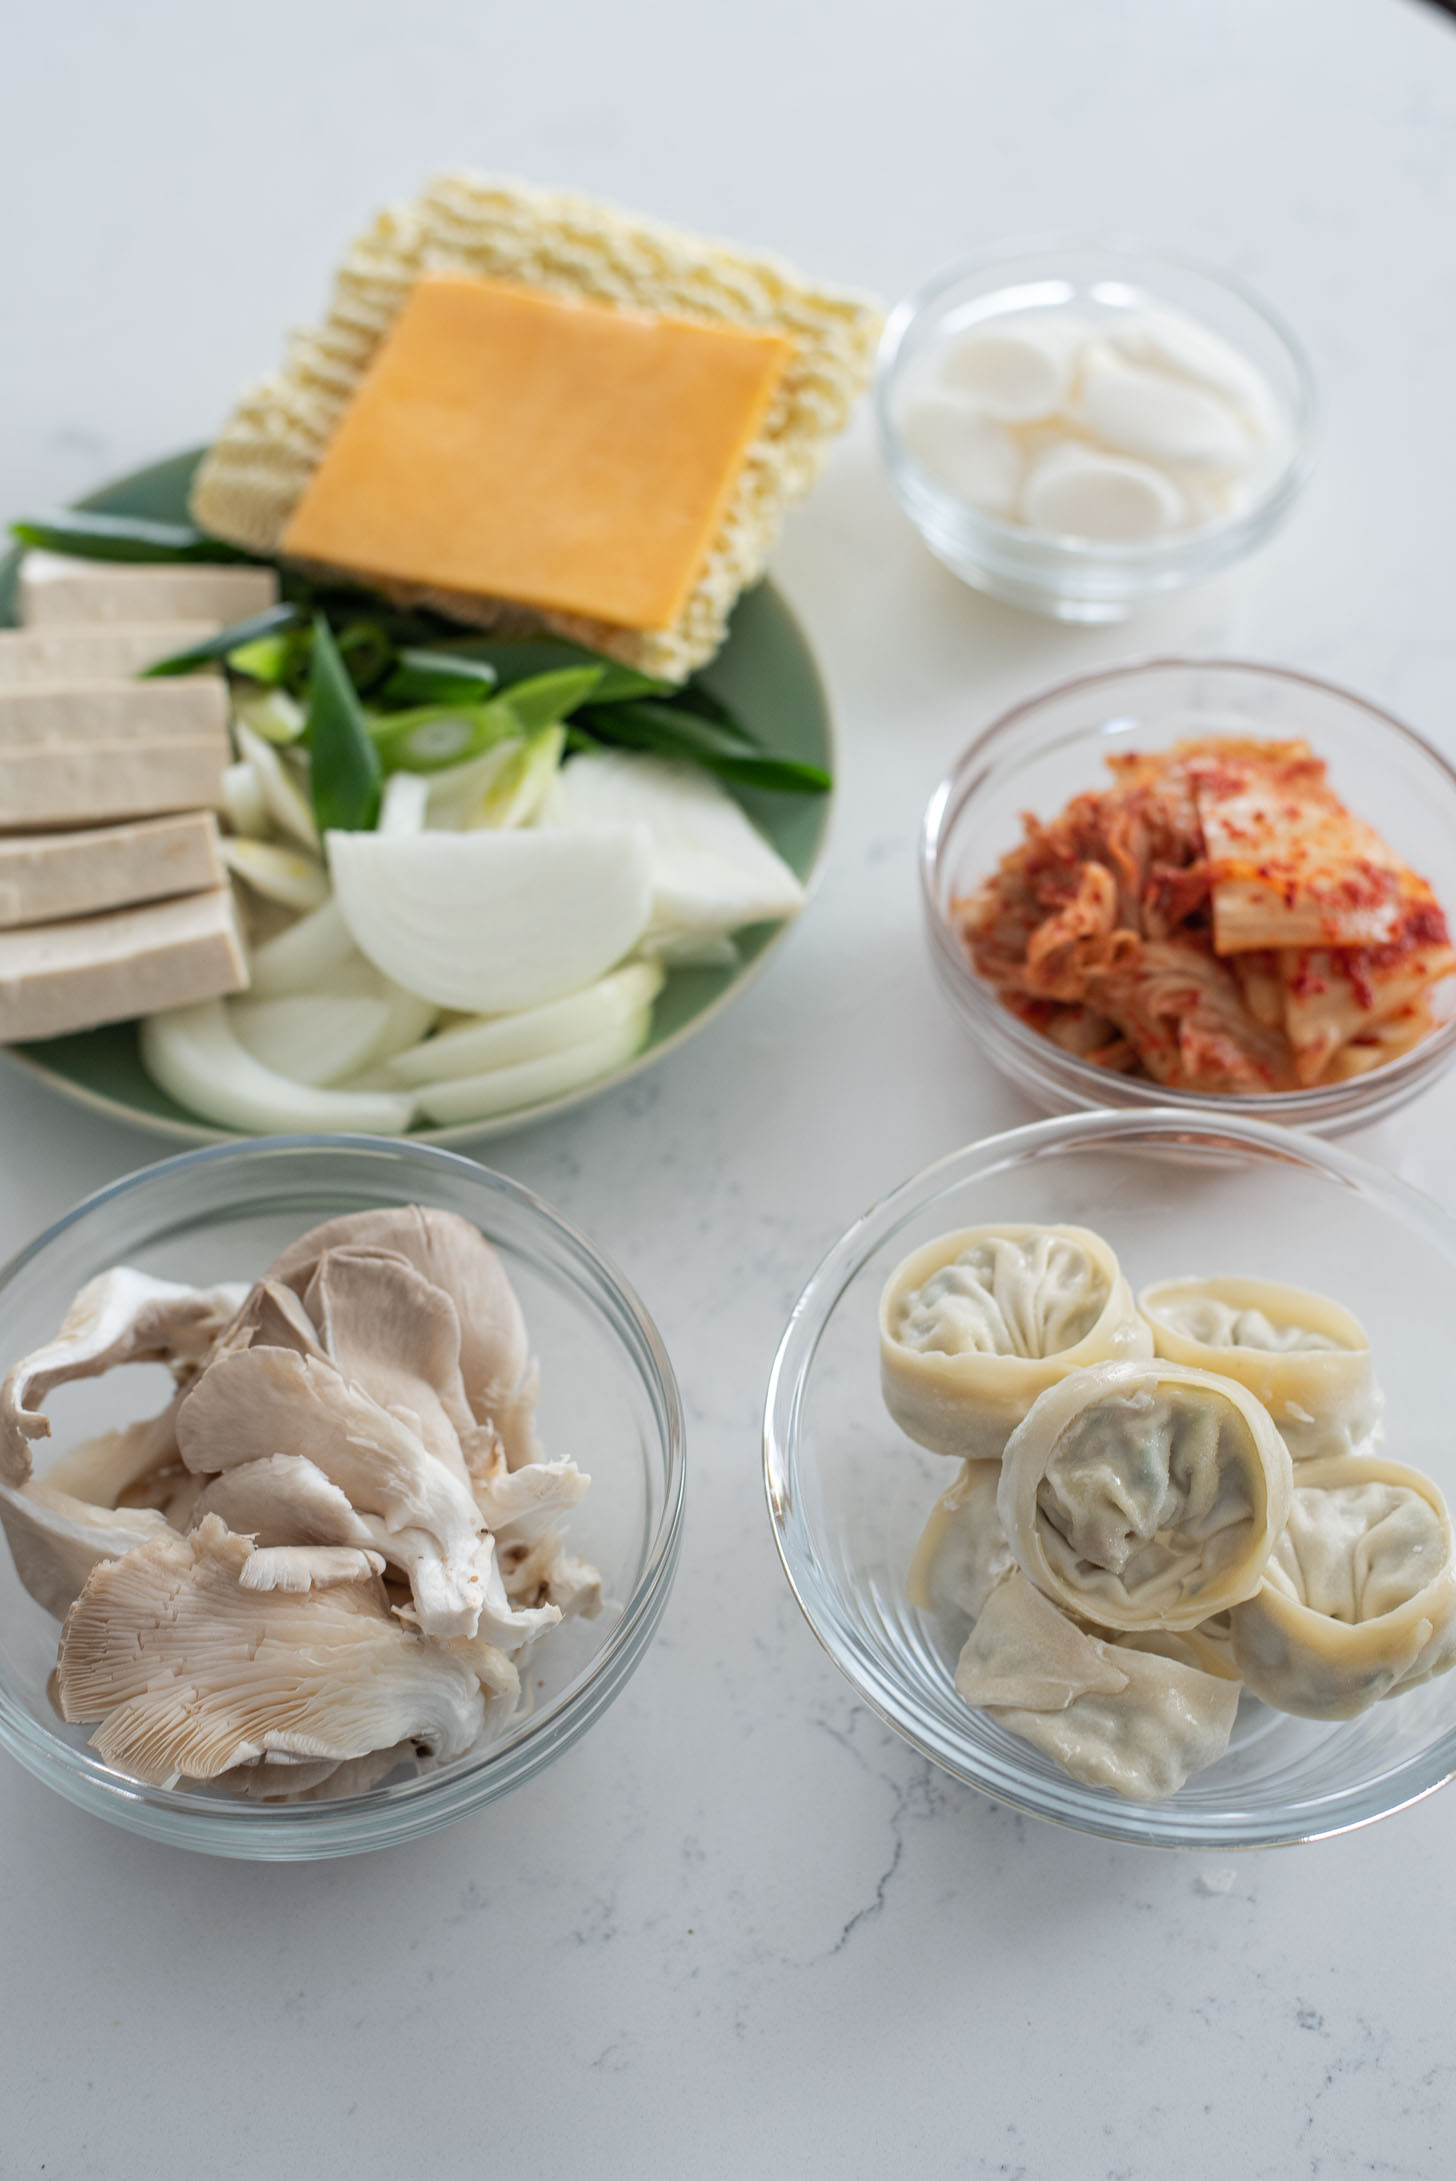 More Korean army stew ingredients are presented.